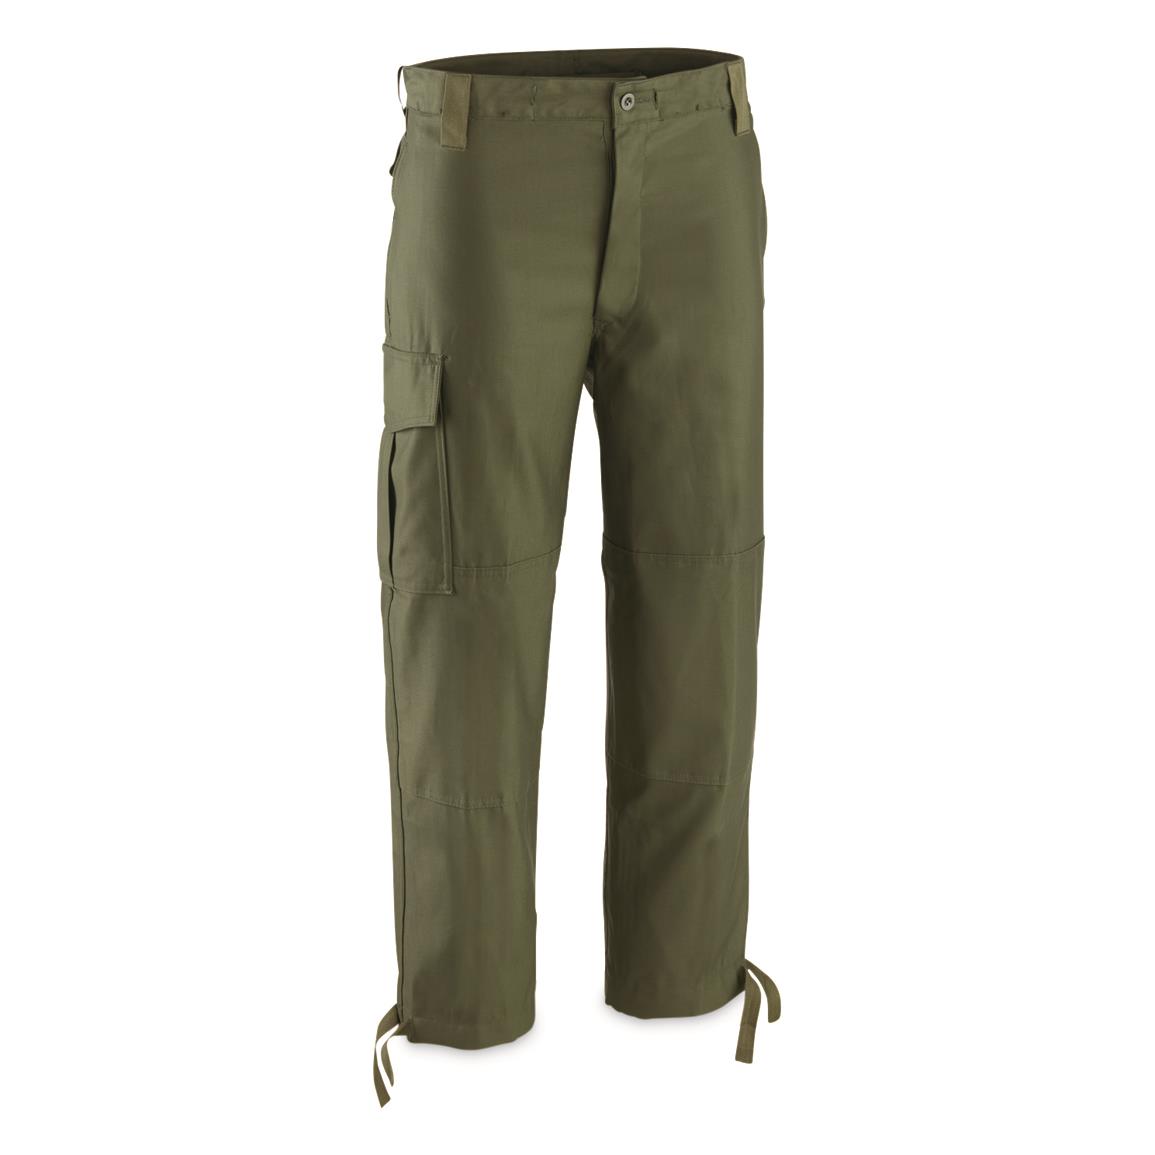 Belgian Military Surplus Olive Drab BDU Combat Pants, New, Olive Drab